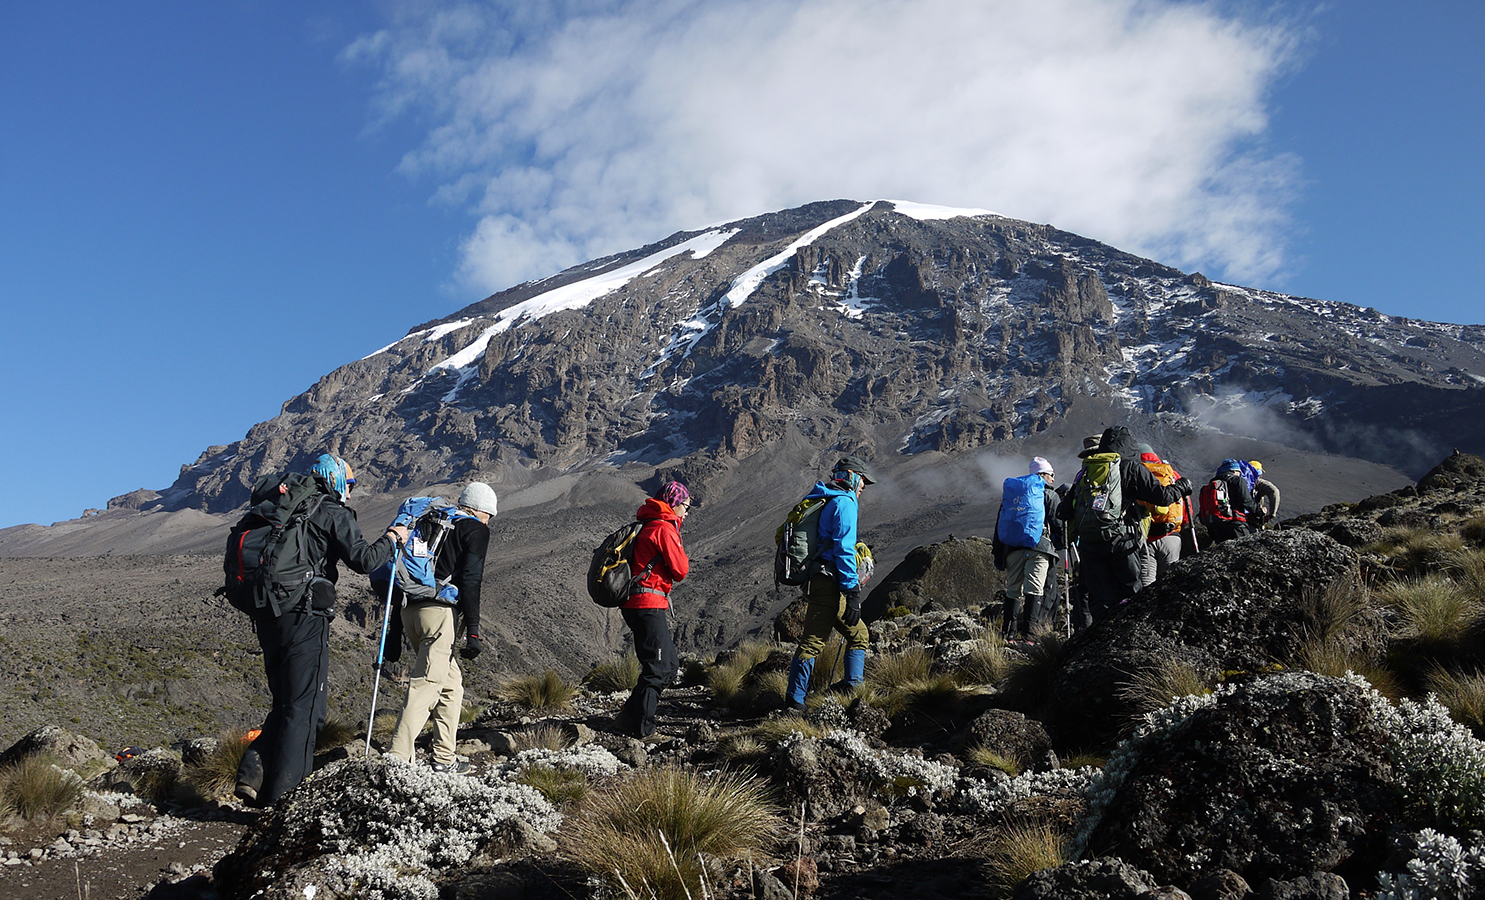 A team climbs through the alpine zone towards the summit of Kilimanjaro